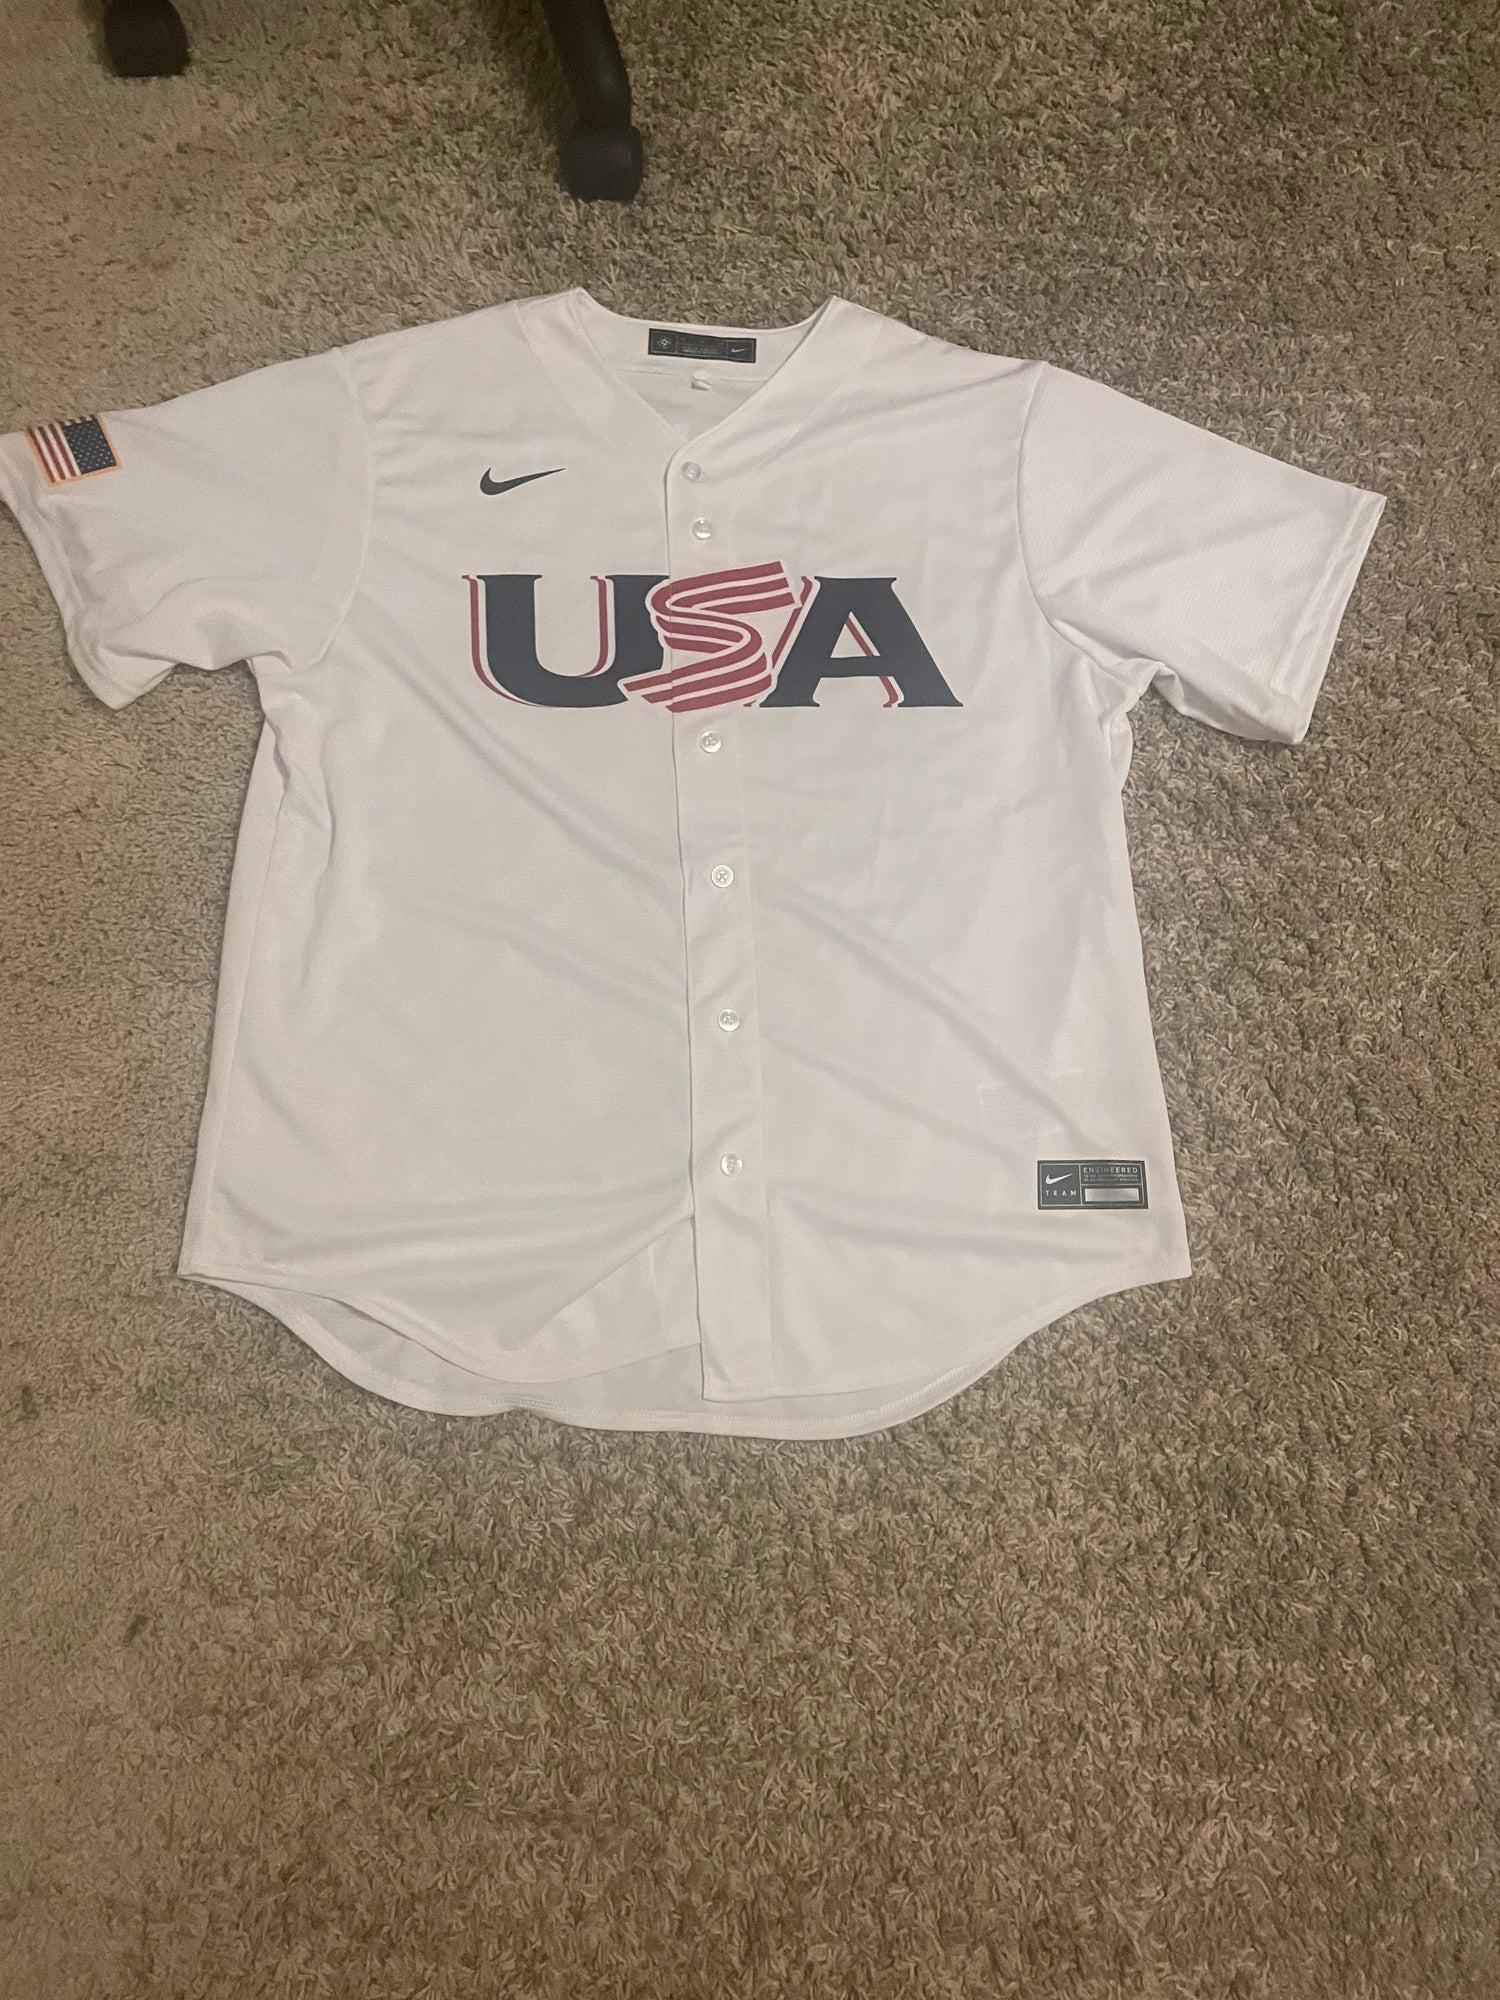 Trea Turner's Team USA jersey is most popular on Fanatics